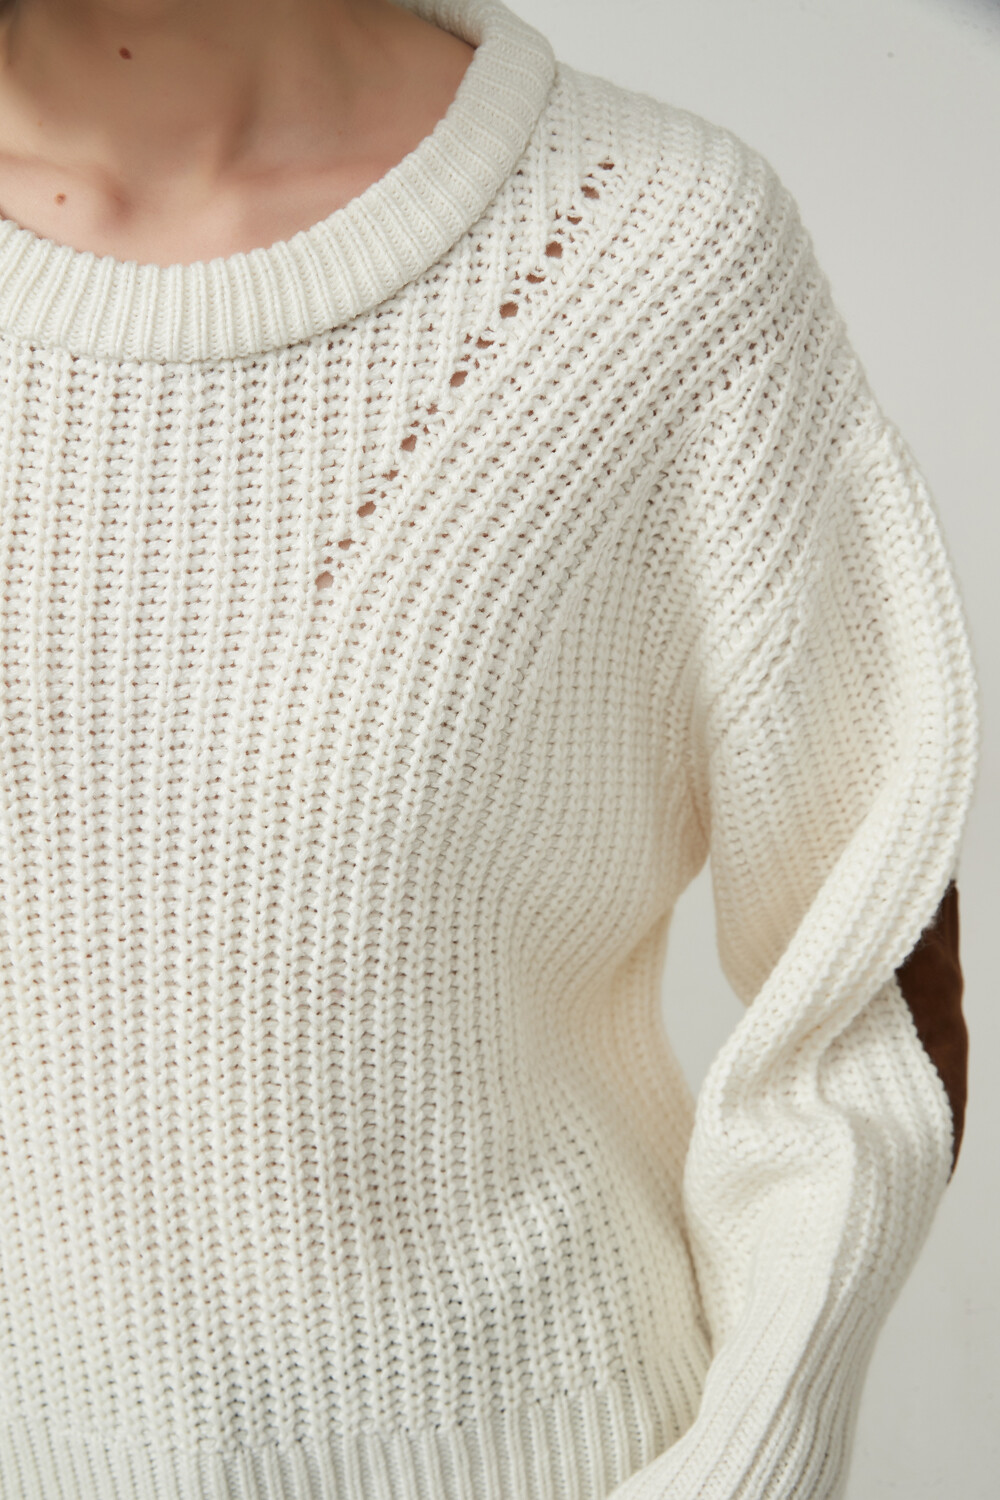 Sweater Sikasso Crudo / Natural